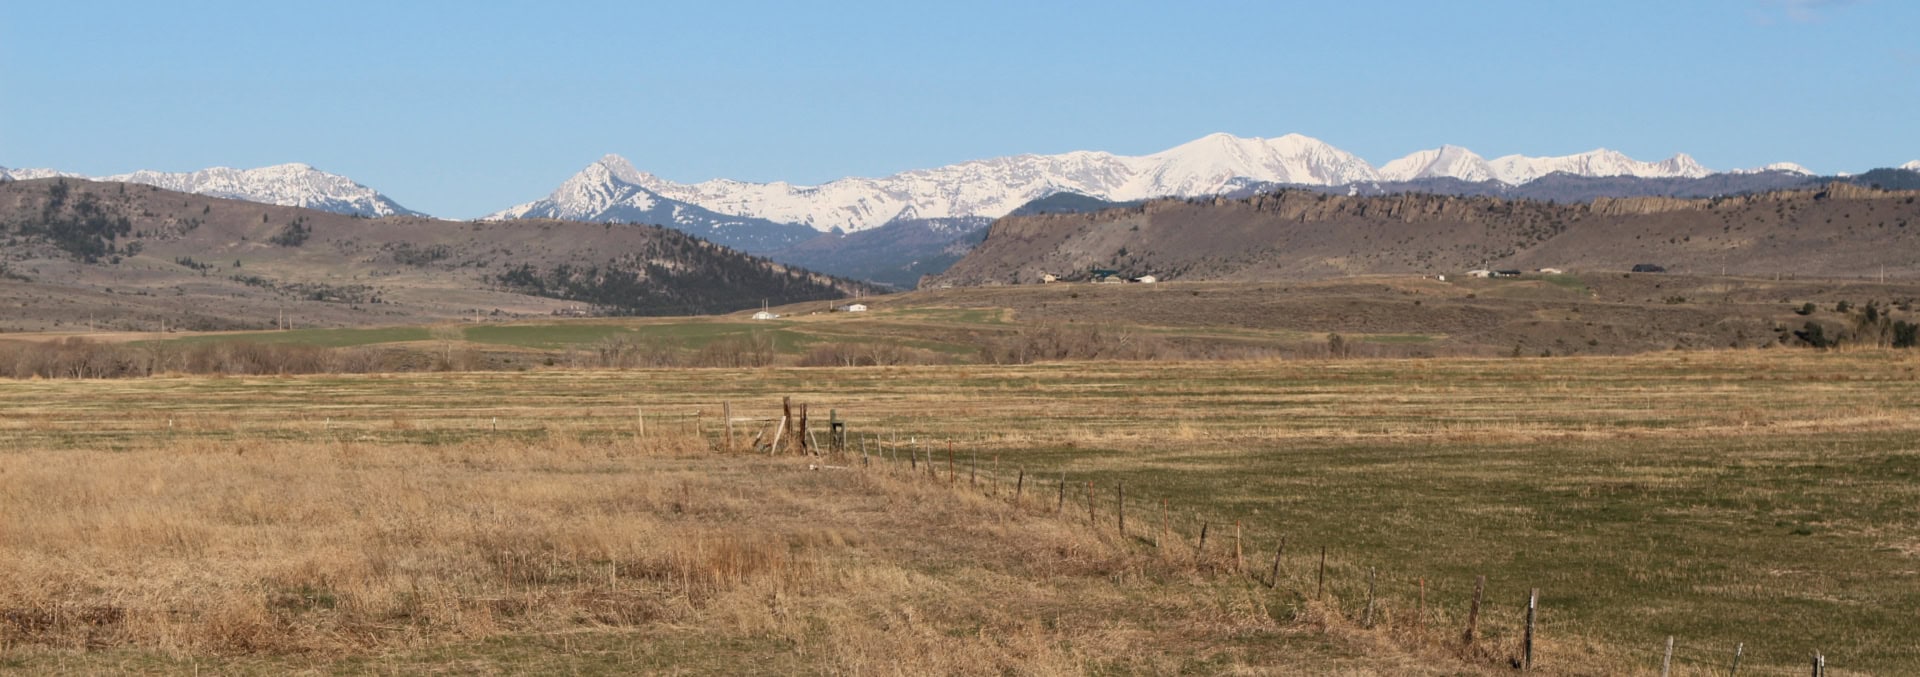 montana farm for sale shields valley irrigated farm